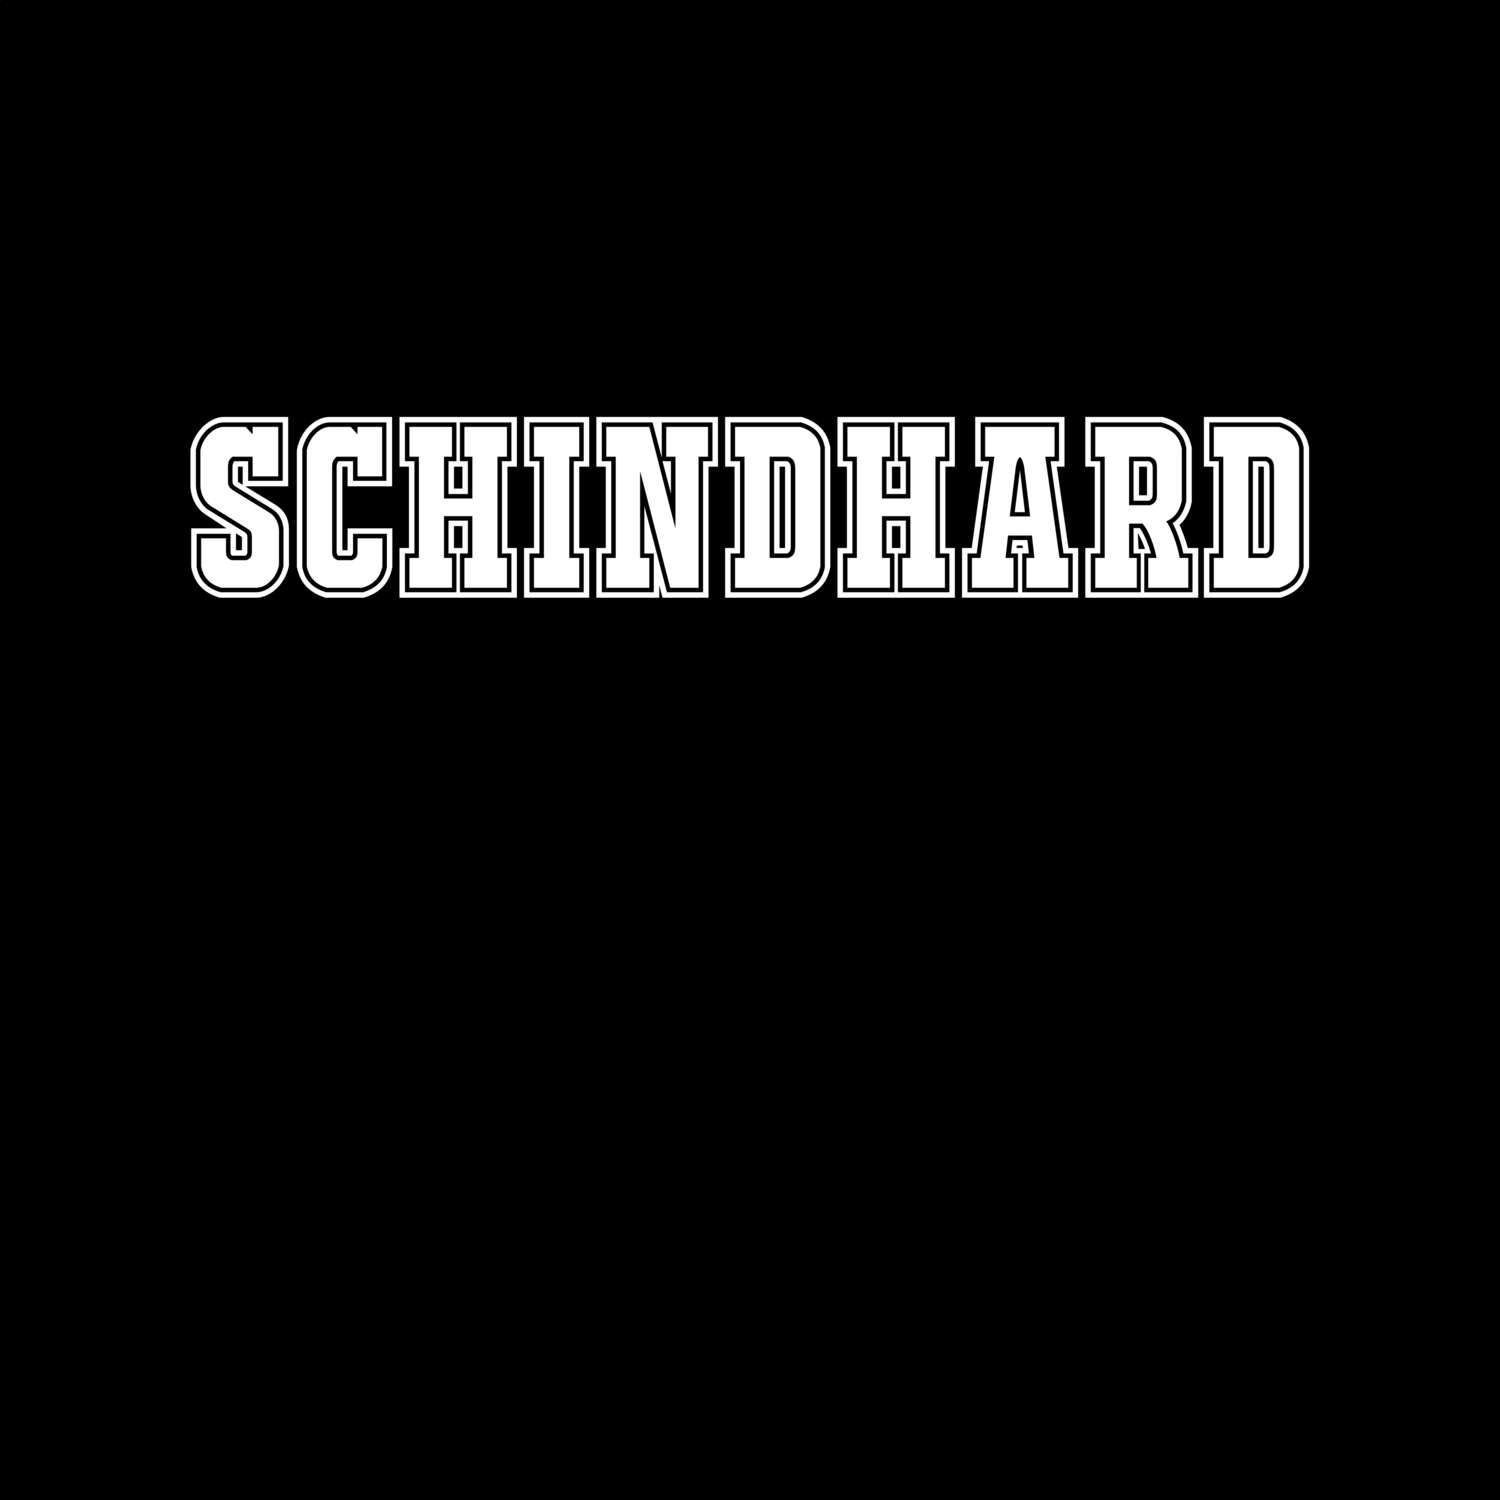 Schindhard T-Shirt »Classic«